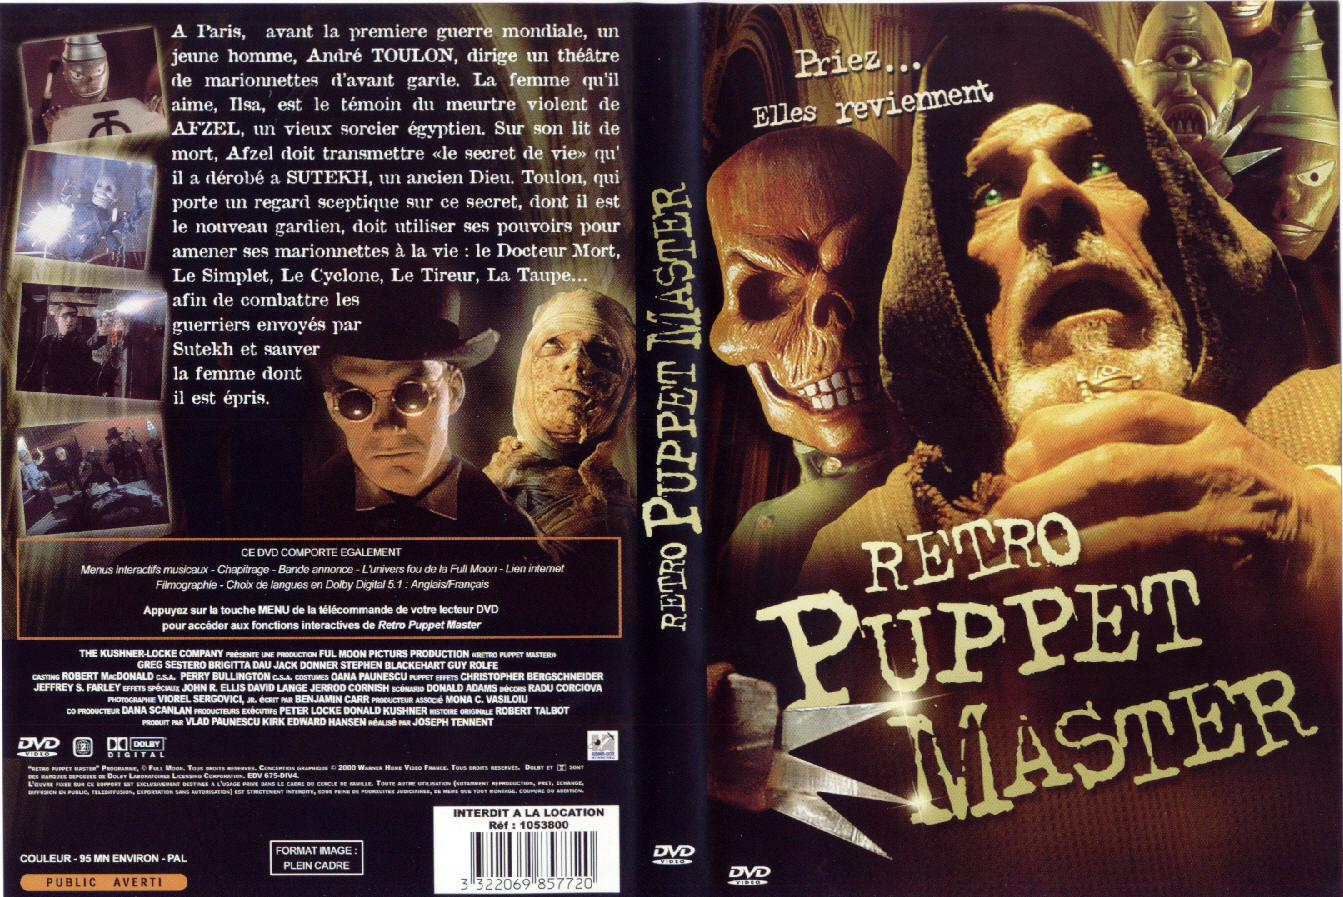 Jaquette DVD Retro puppet master